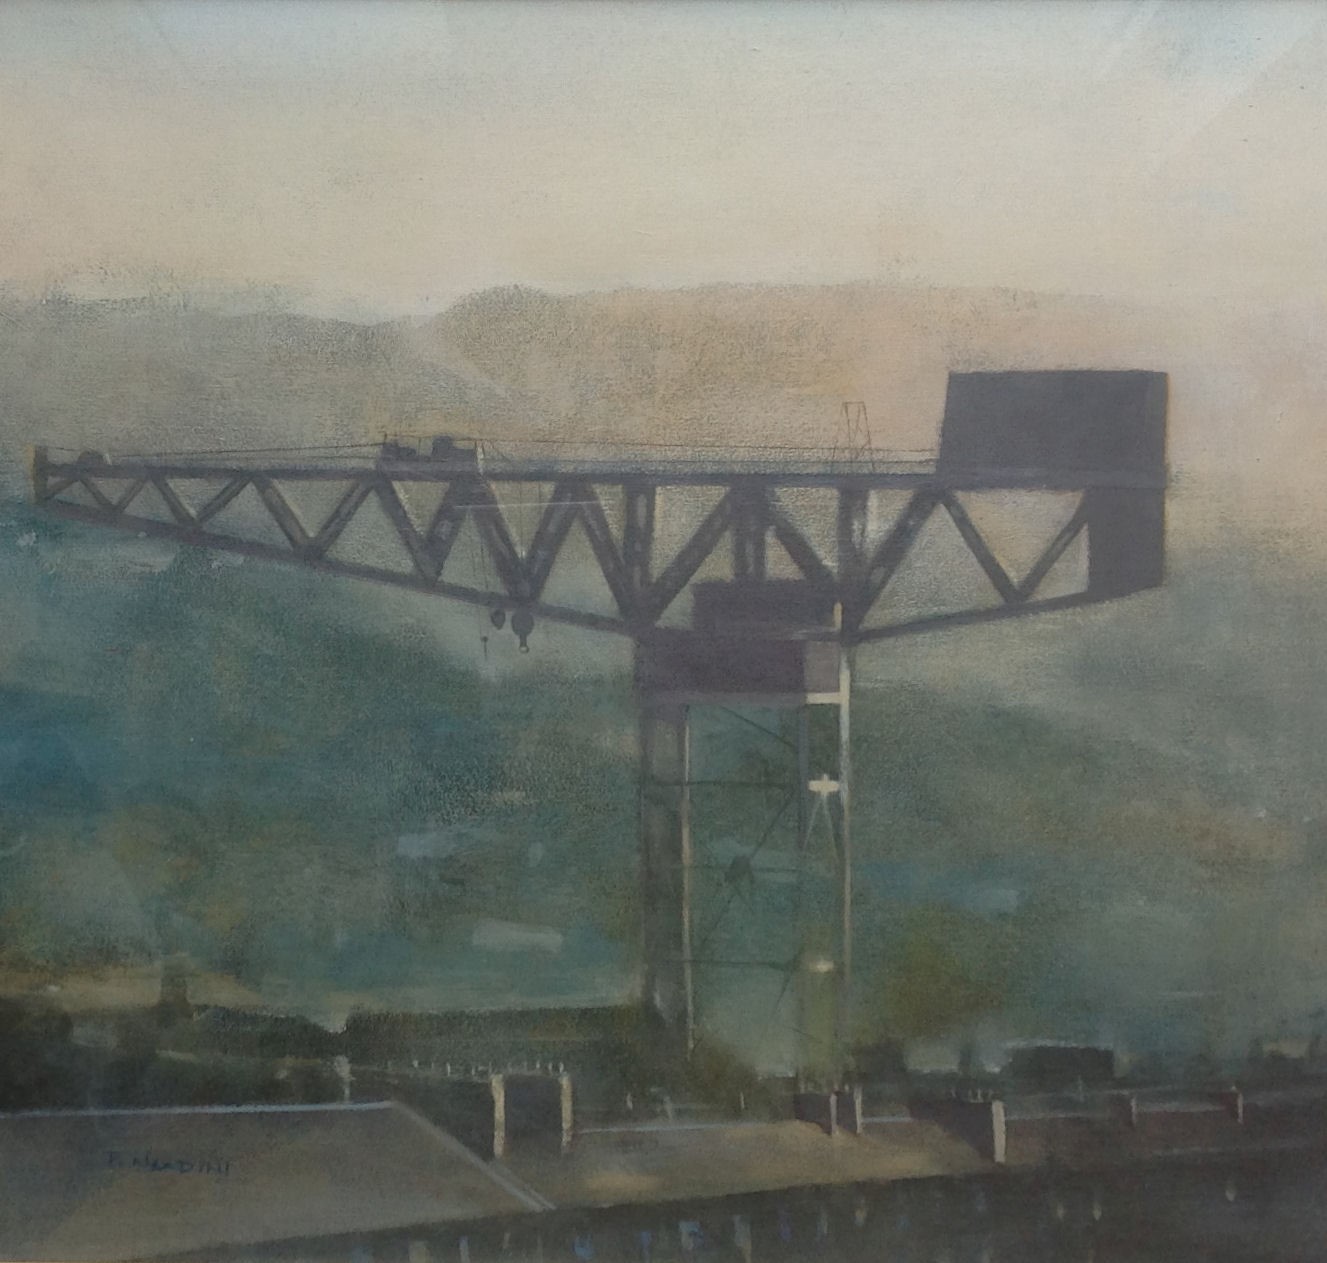 'The Finnieston Crane' by artist Peter Nardini